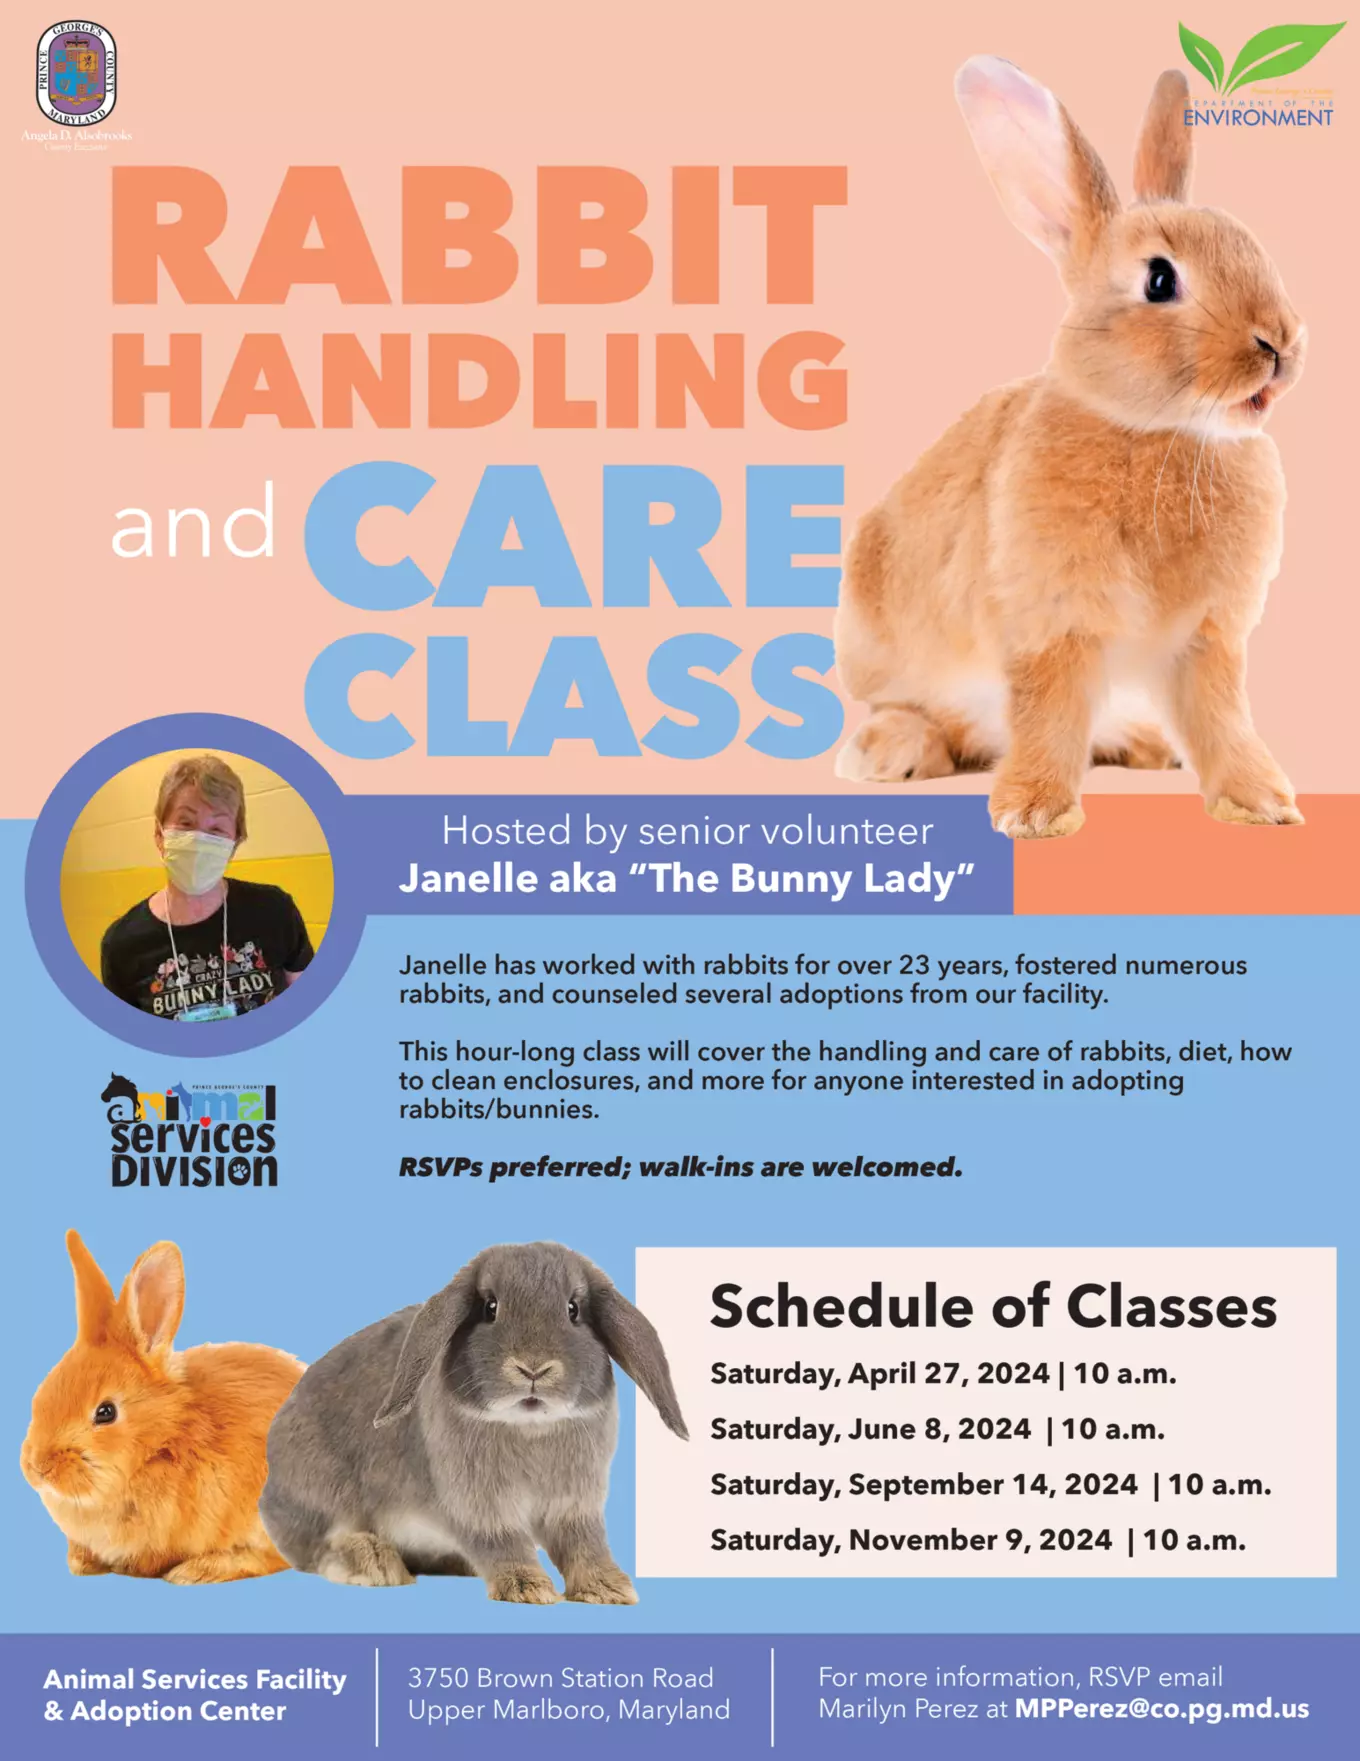 Rabbit handling, care class